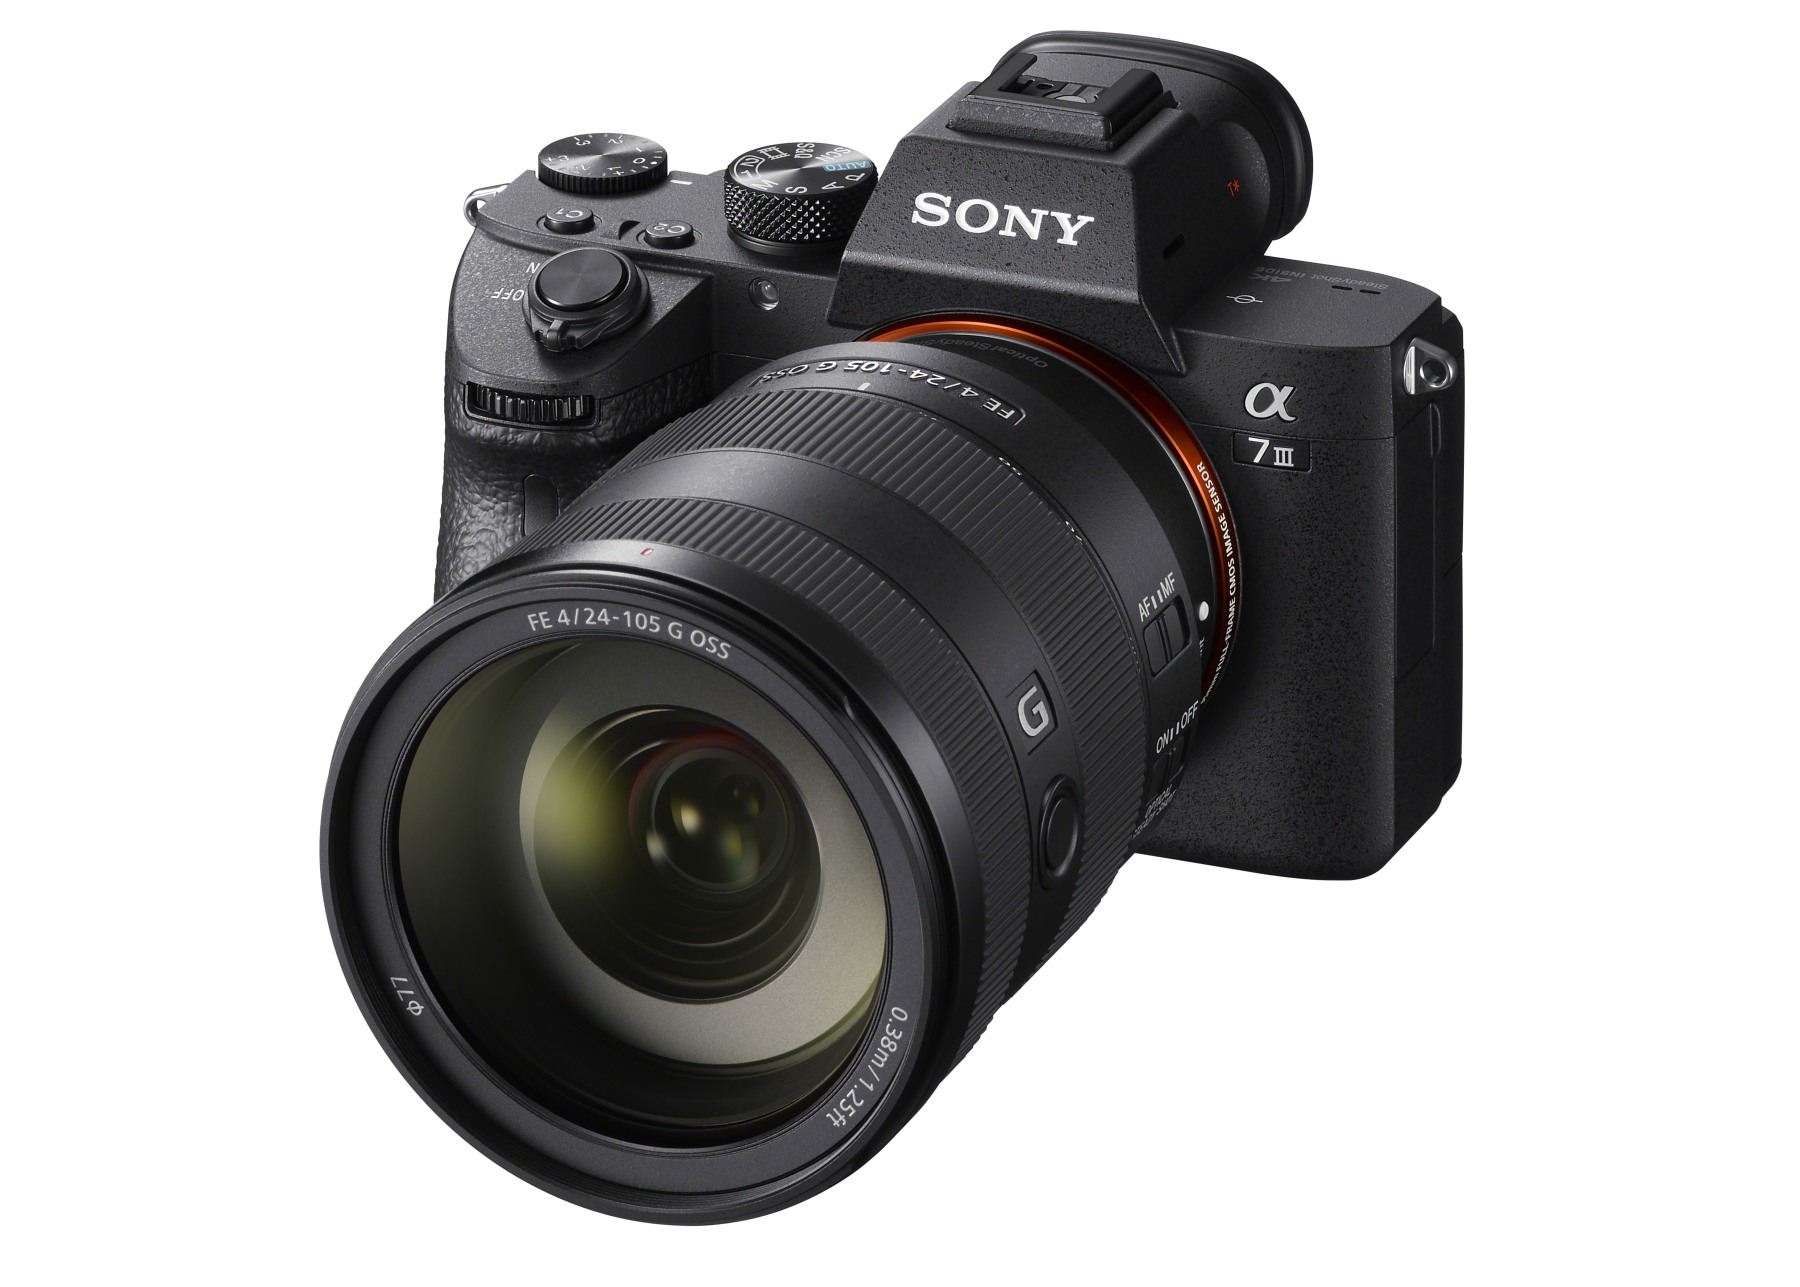 Sony's 2,000 A7 III camera adds 4K video